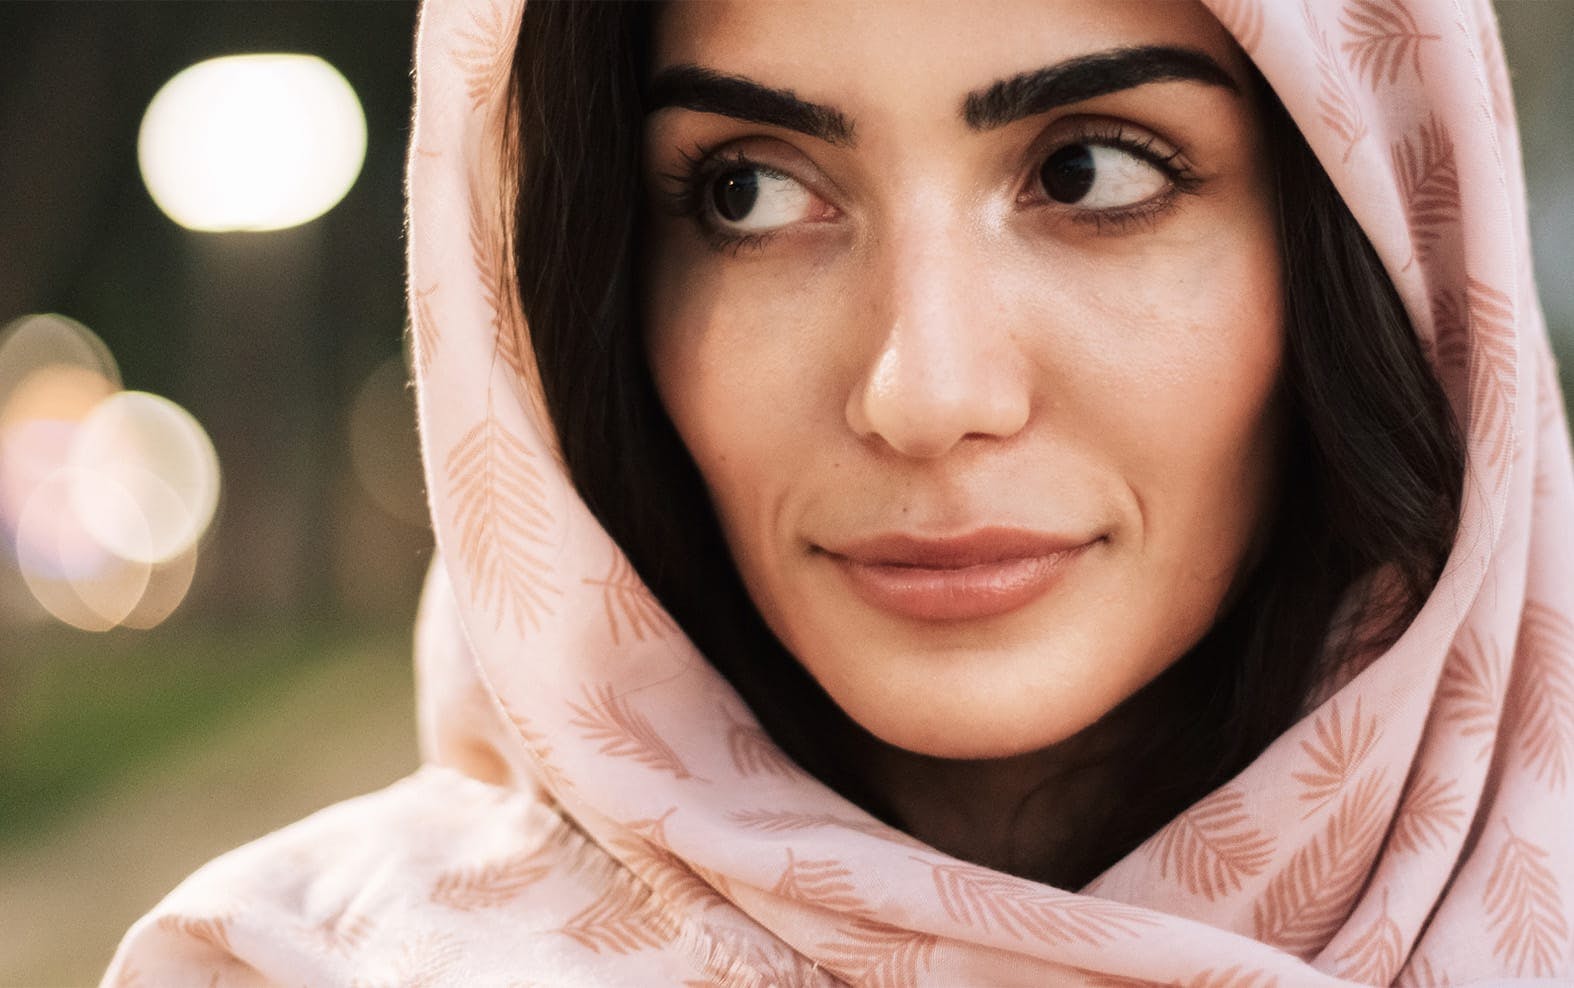 Woman wearing a pink head scarf